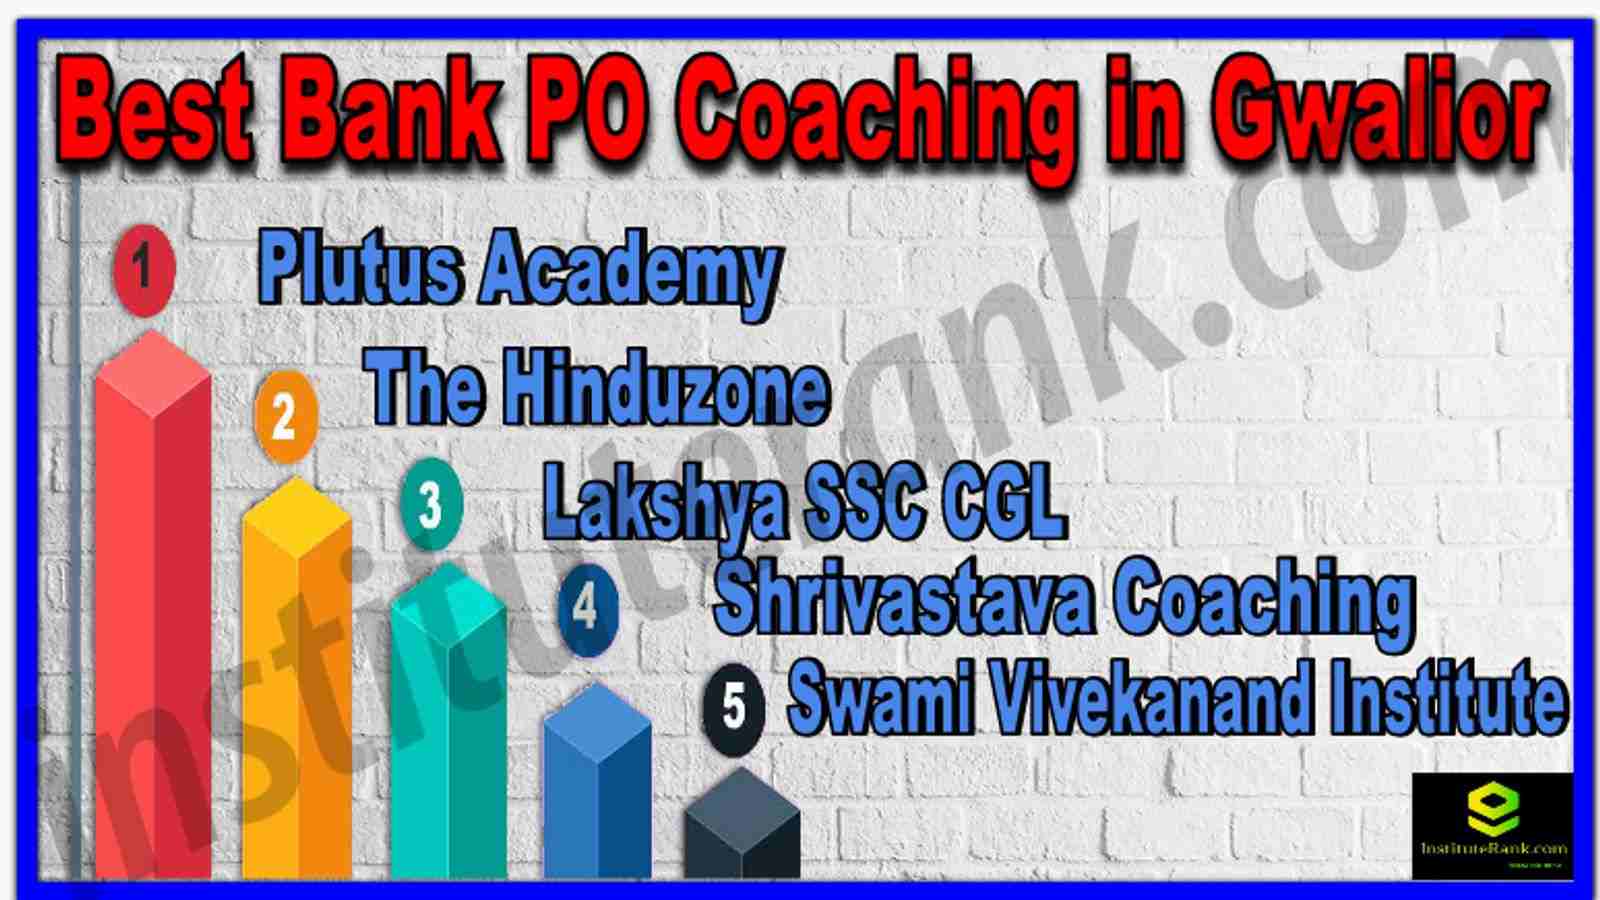 Best 10 Bank PO Coaching in Gwalior